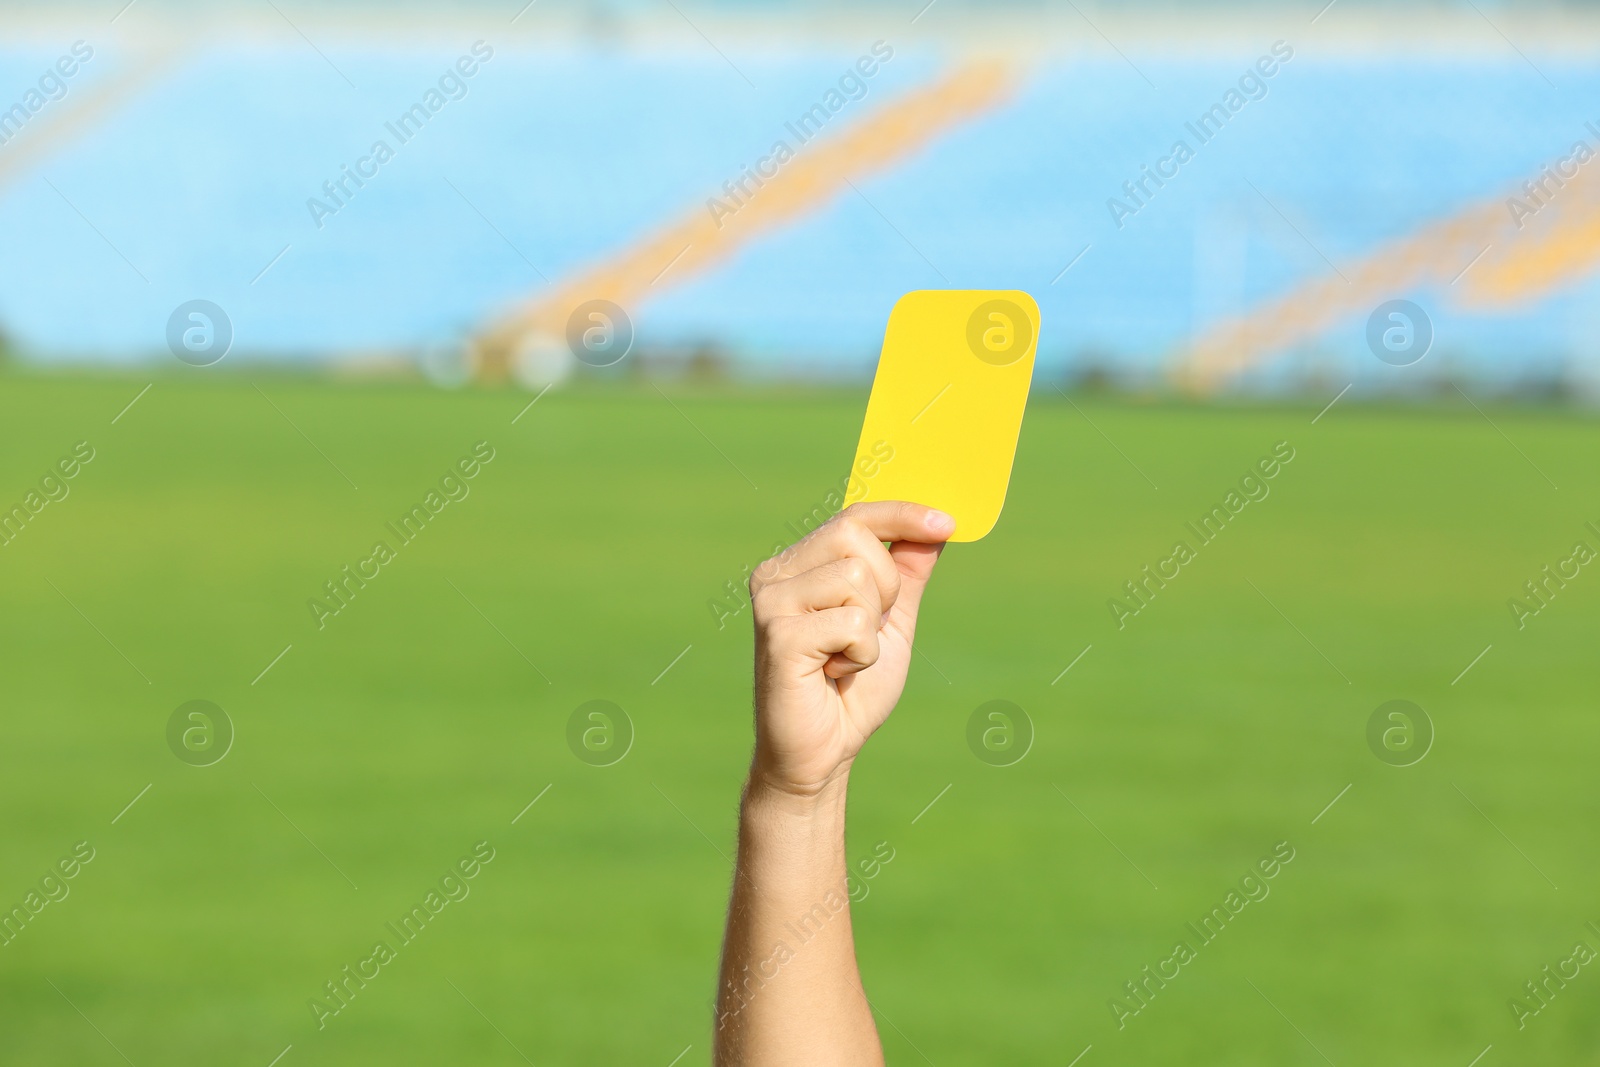 Photo of Football referee showing yellow card at stadium, closeup